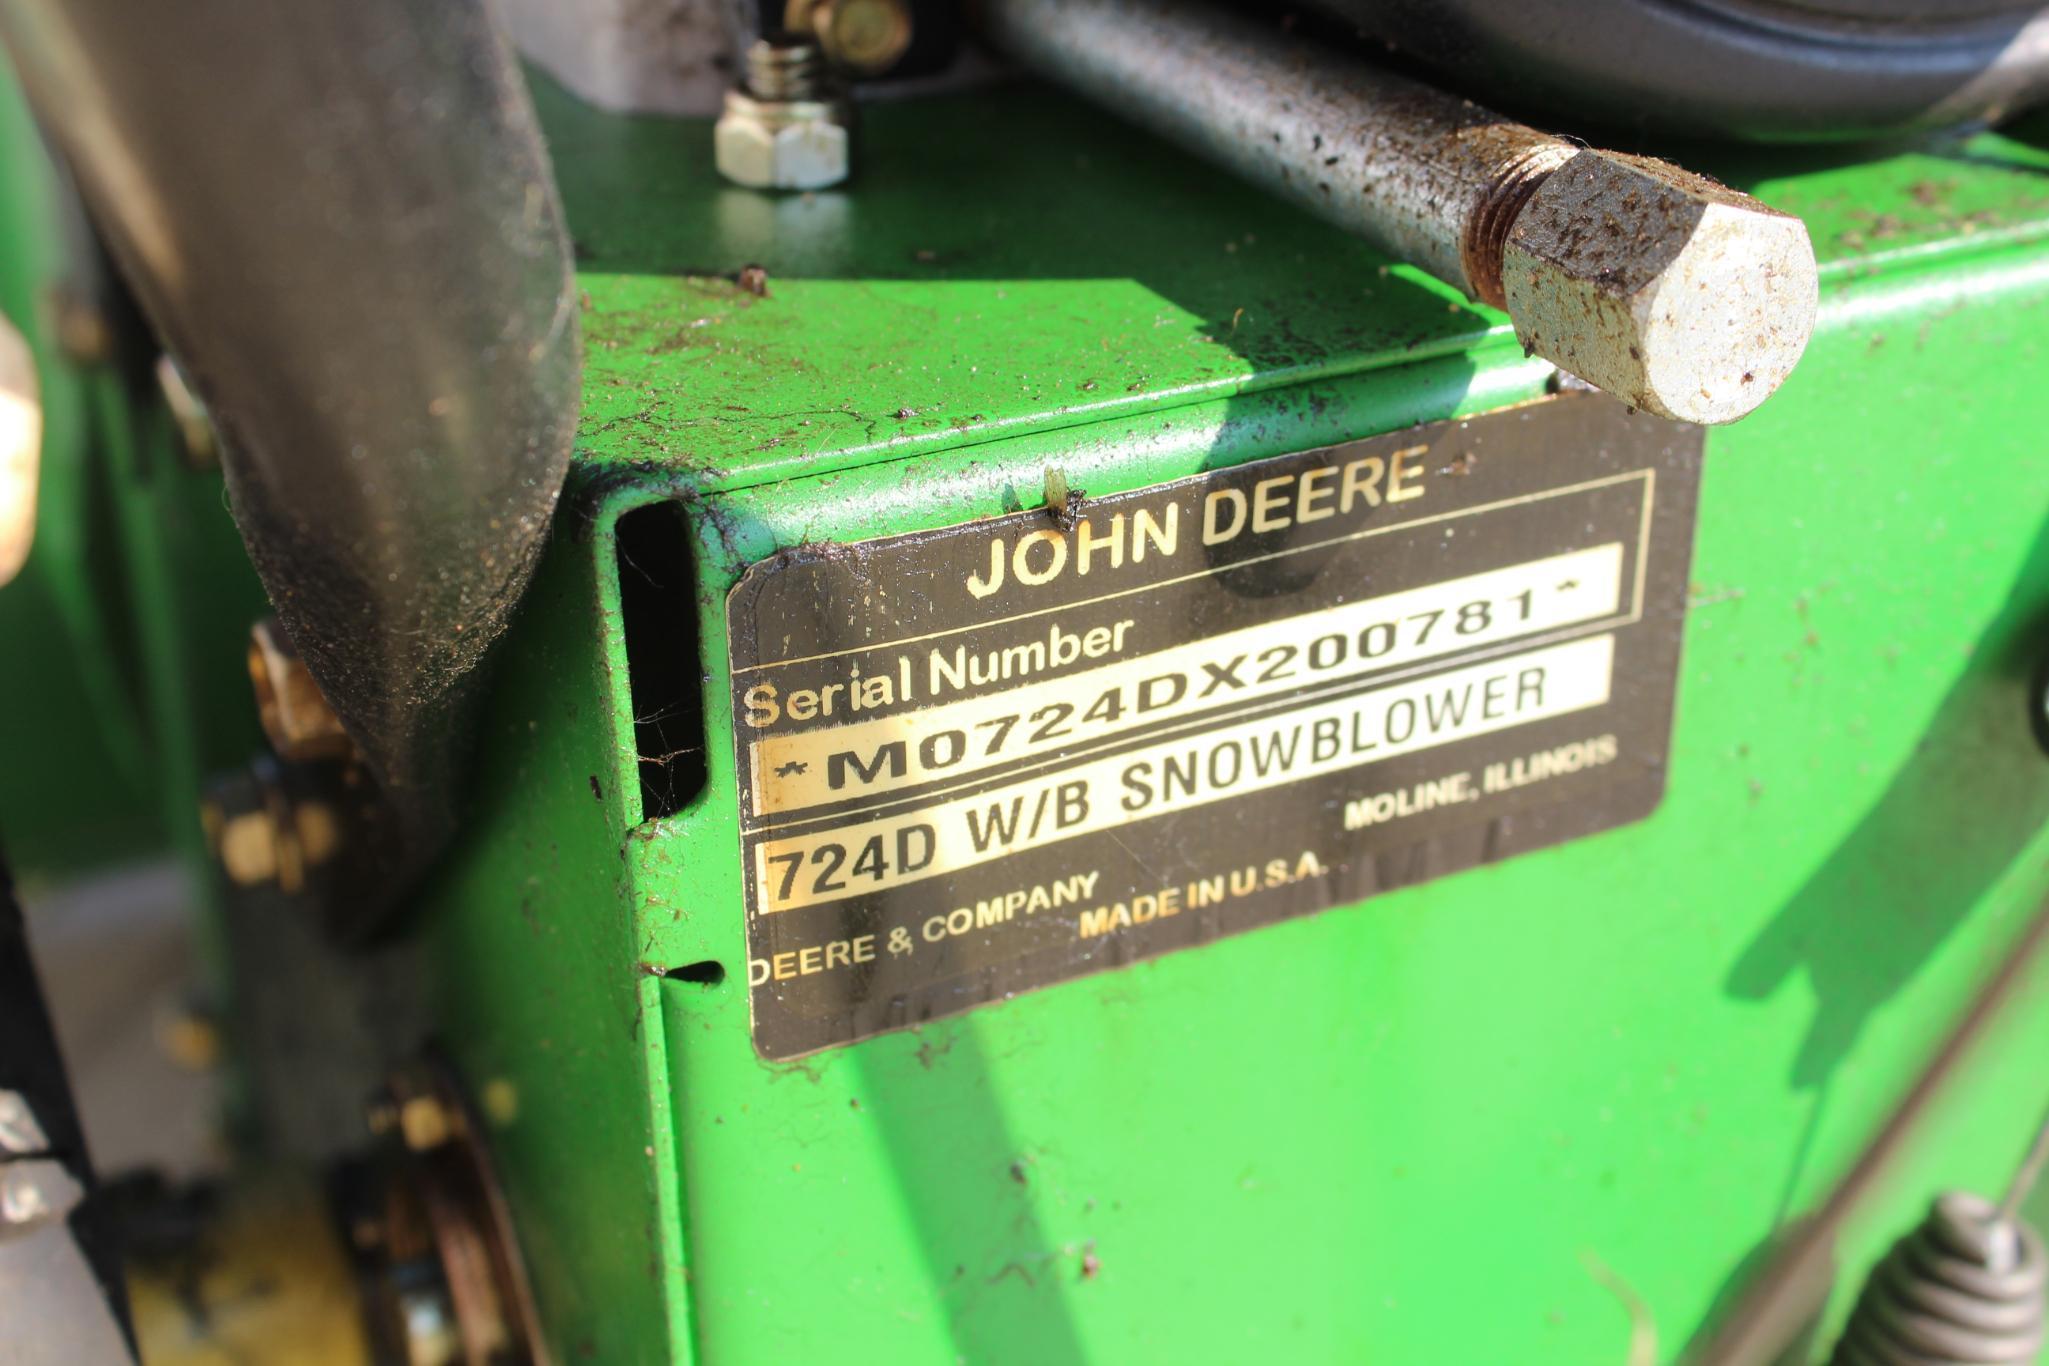 John Deere 724D self-propelled snow blower